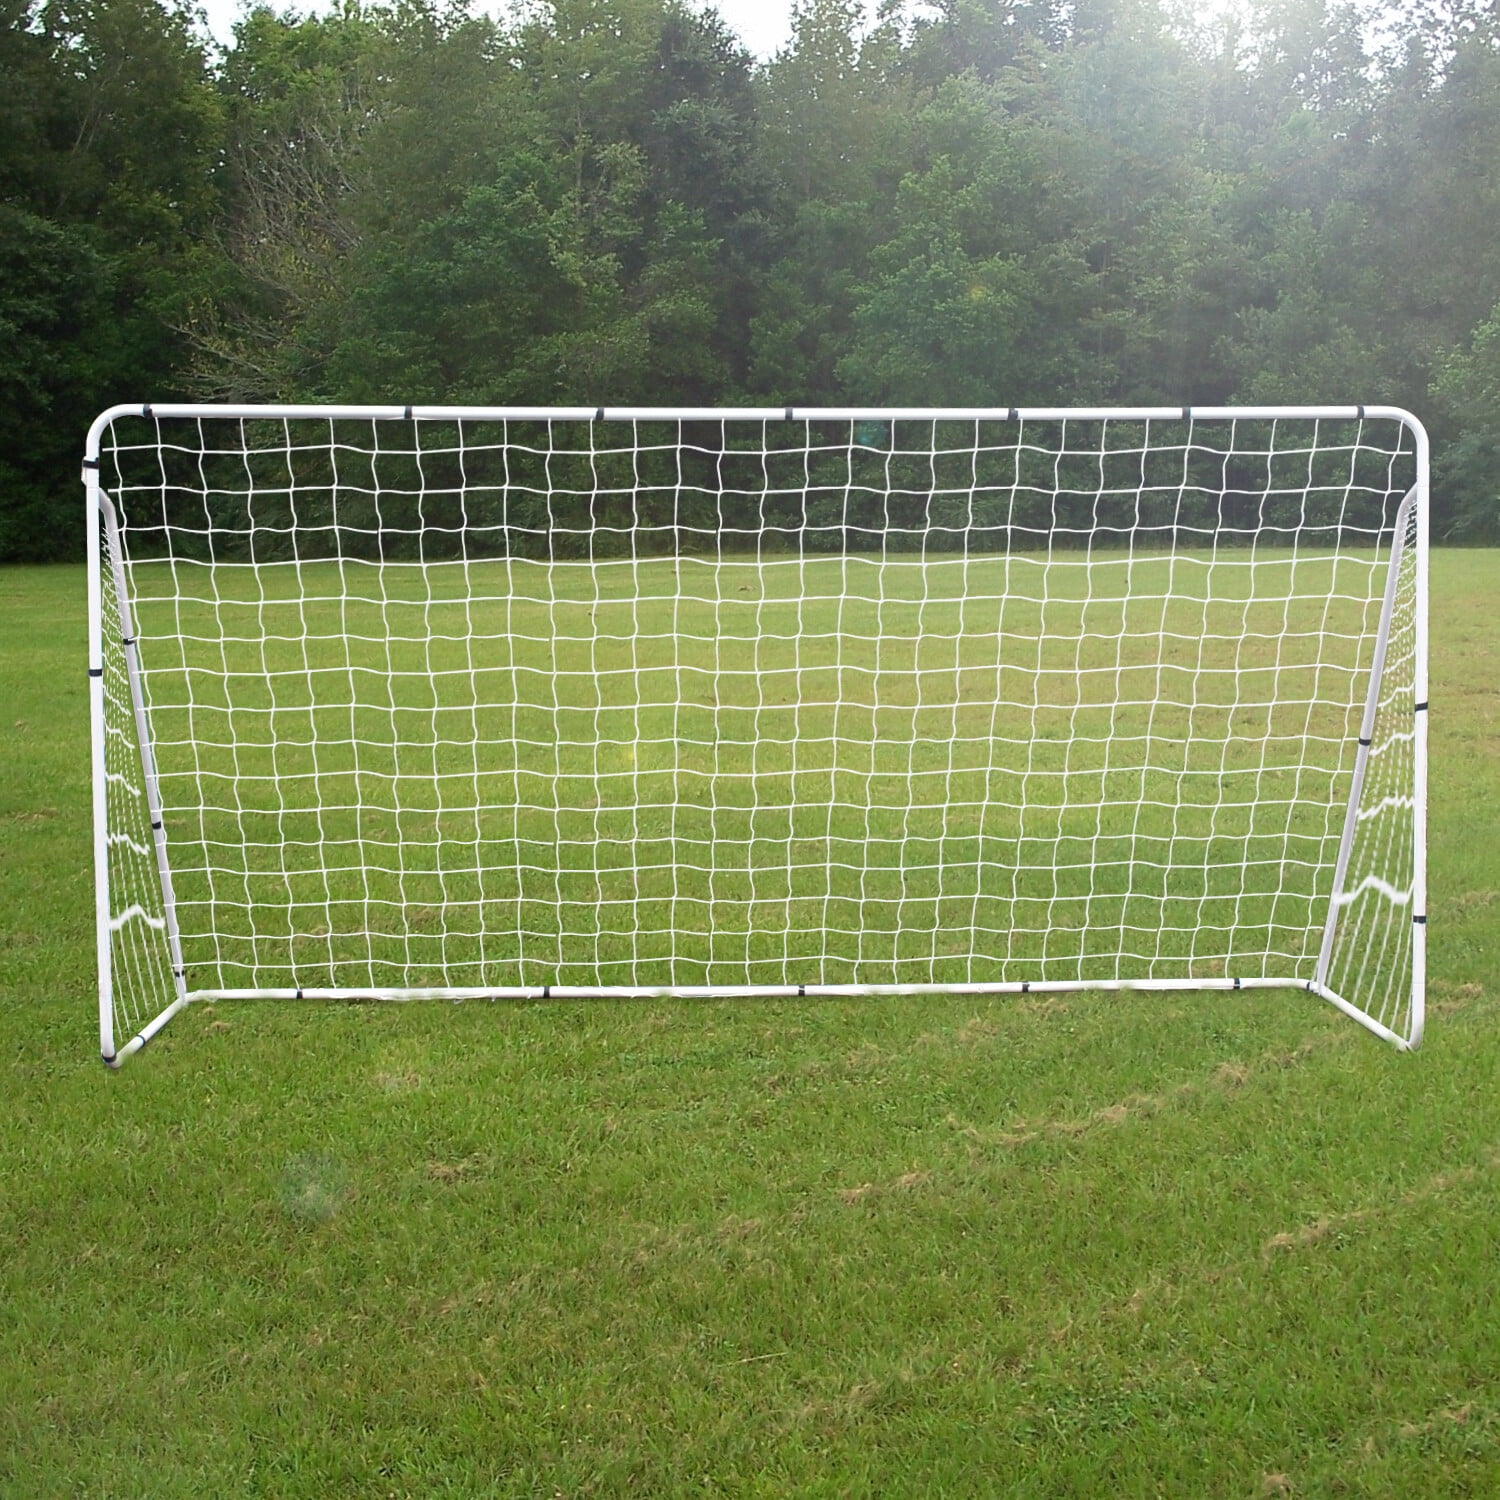 Details about   28"x19.7"Football Soccer Goal Post Net For Kids Outdoor Football Match Training 